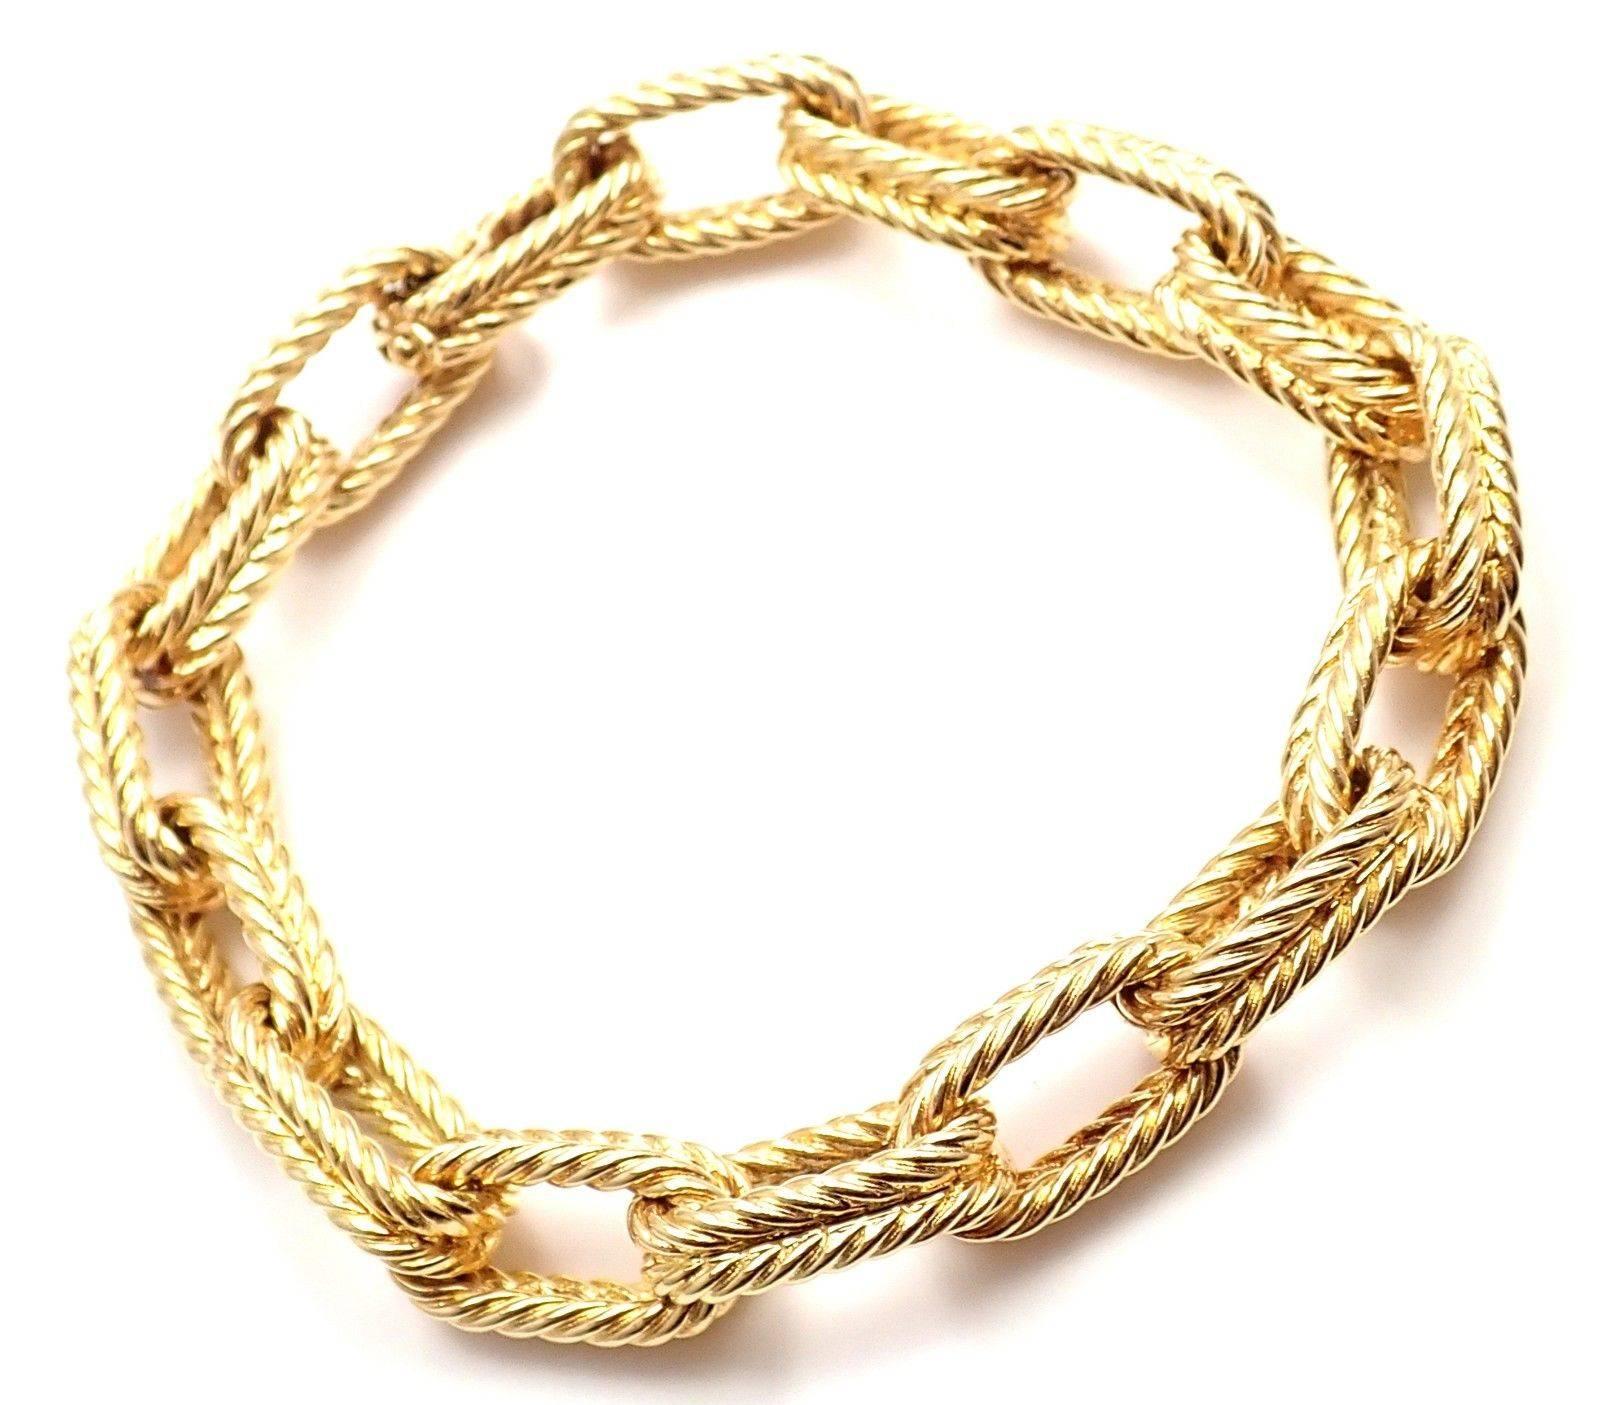 18k Yellow Gold Vintage Textured Link Bracelet by Van Cleef & Arpels.
Details:
Length: 7.5